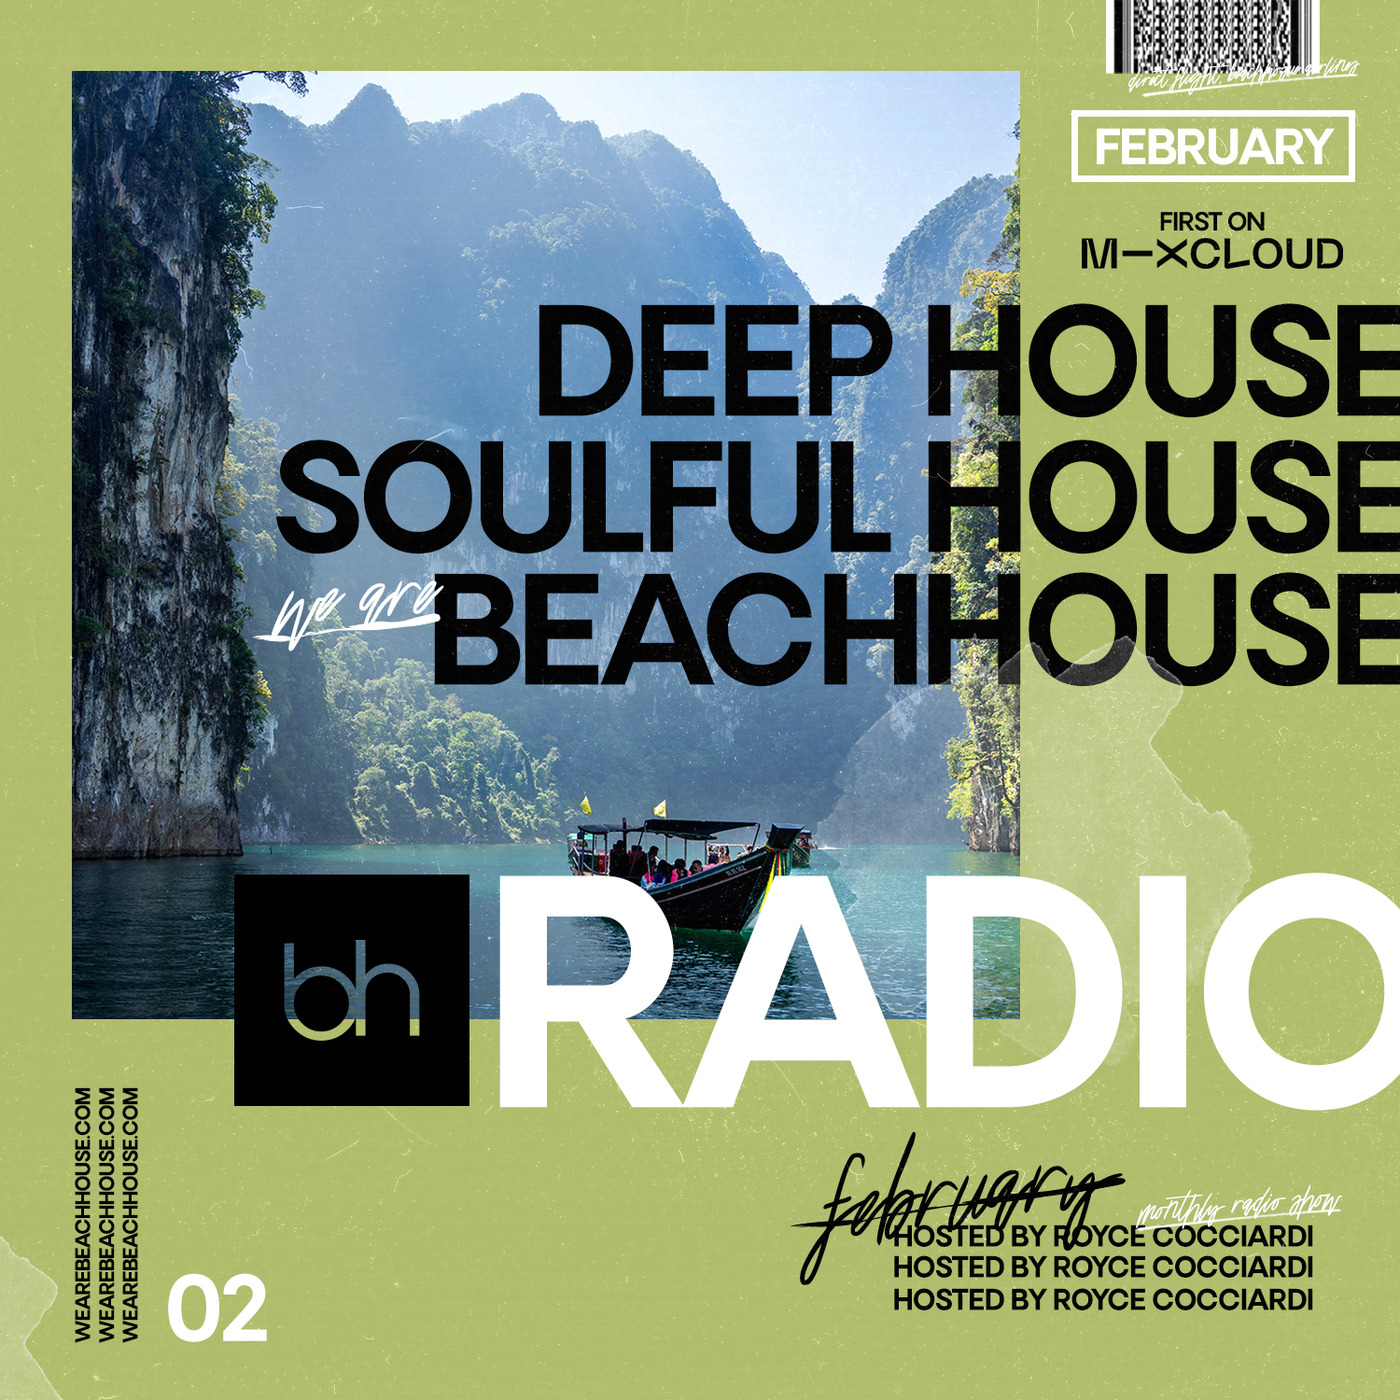 Beachhouse RADIO - February 2020 - Episode 02